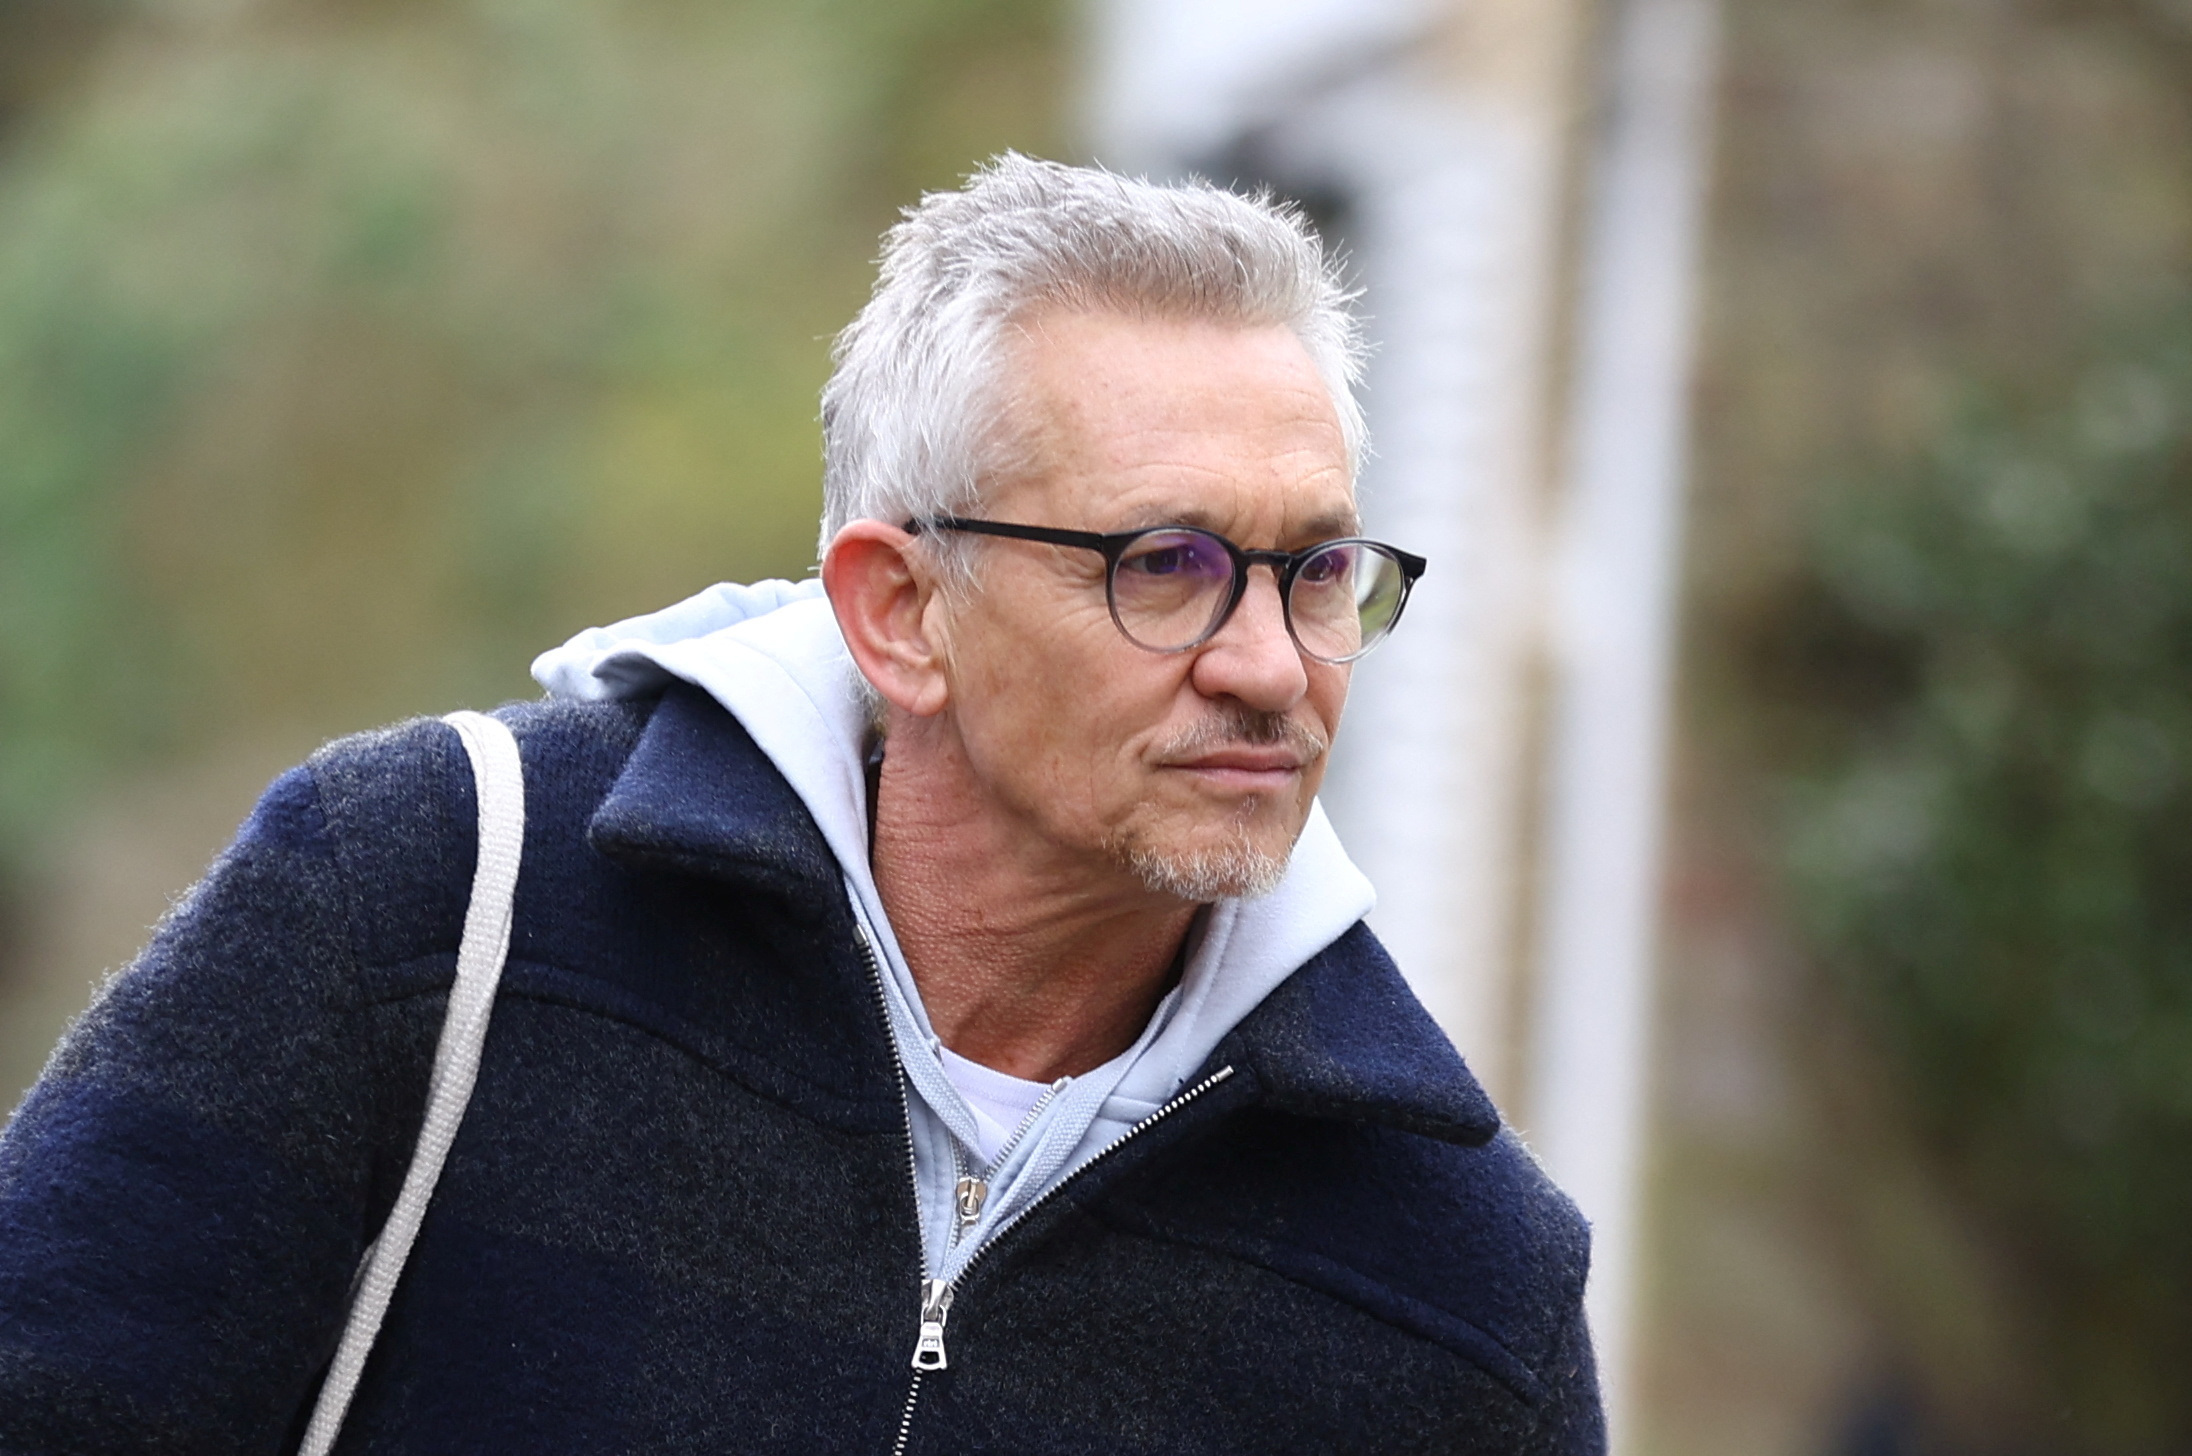 Football presenter Gary Lineker walks outside his home in London